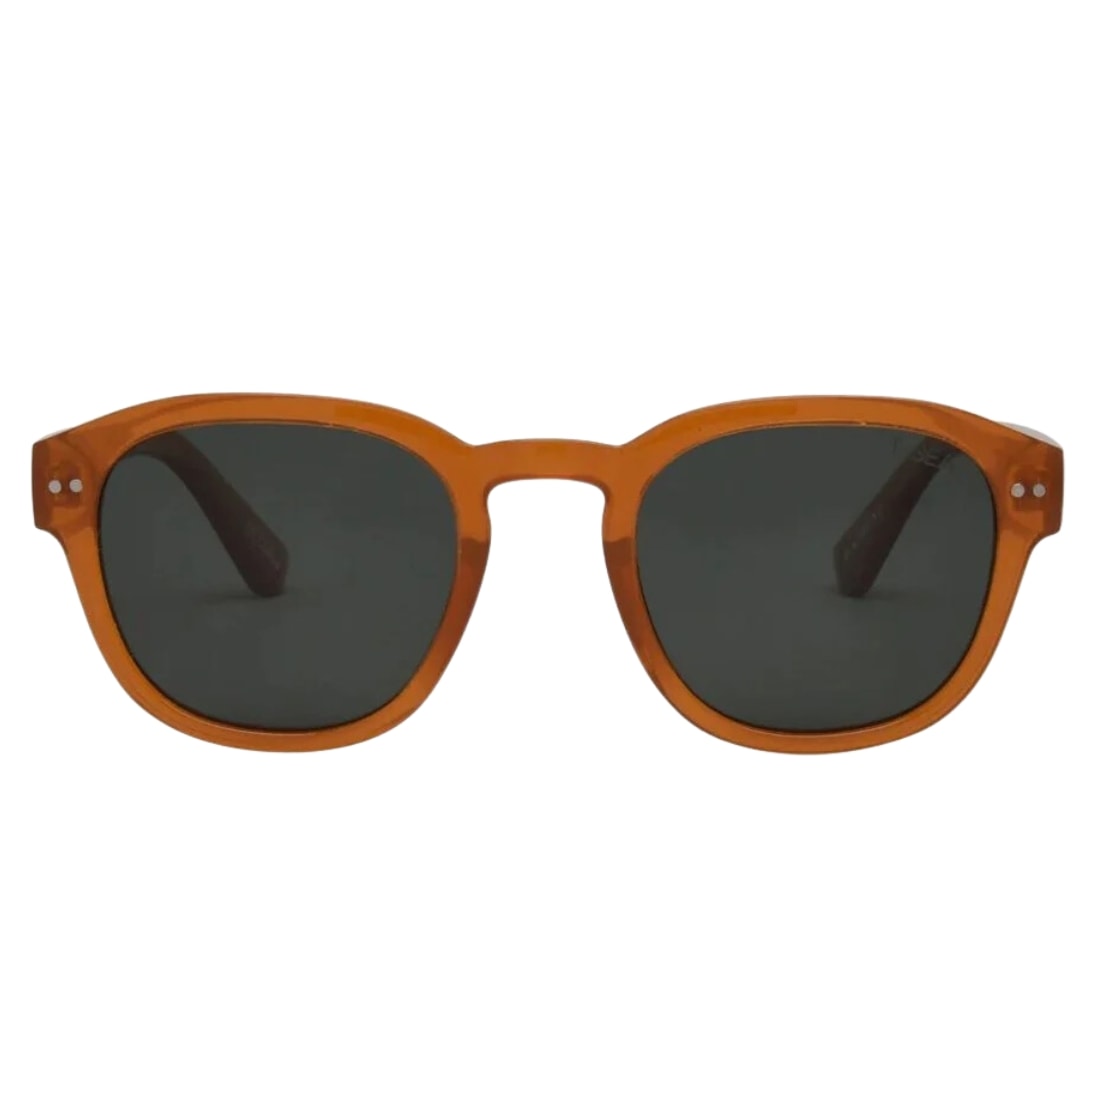 I-Sea Barton Round Polarised Sunglasses - Sunshine/Green Polarized Lens - Round Sunglasses by I-Sea